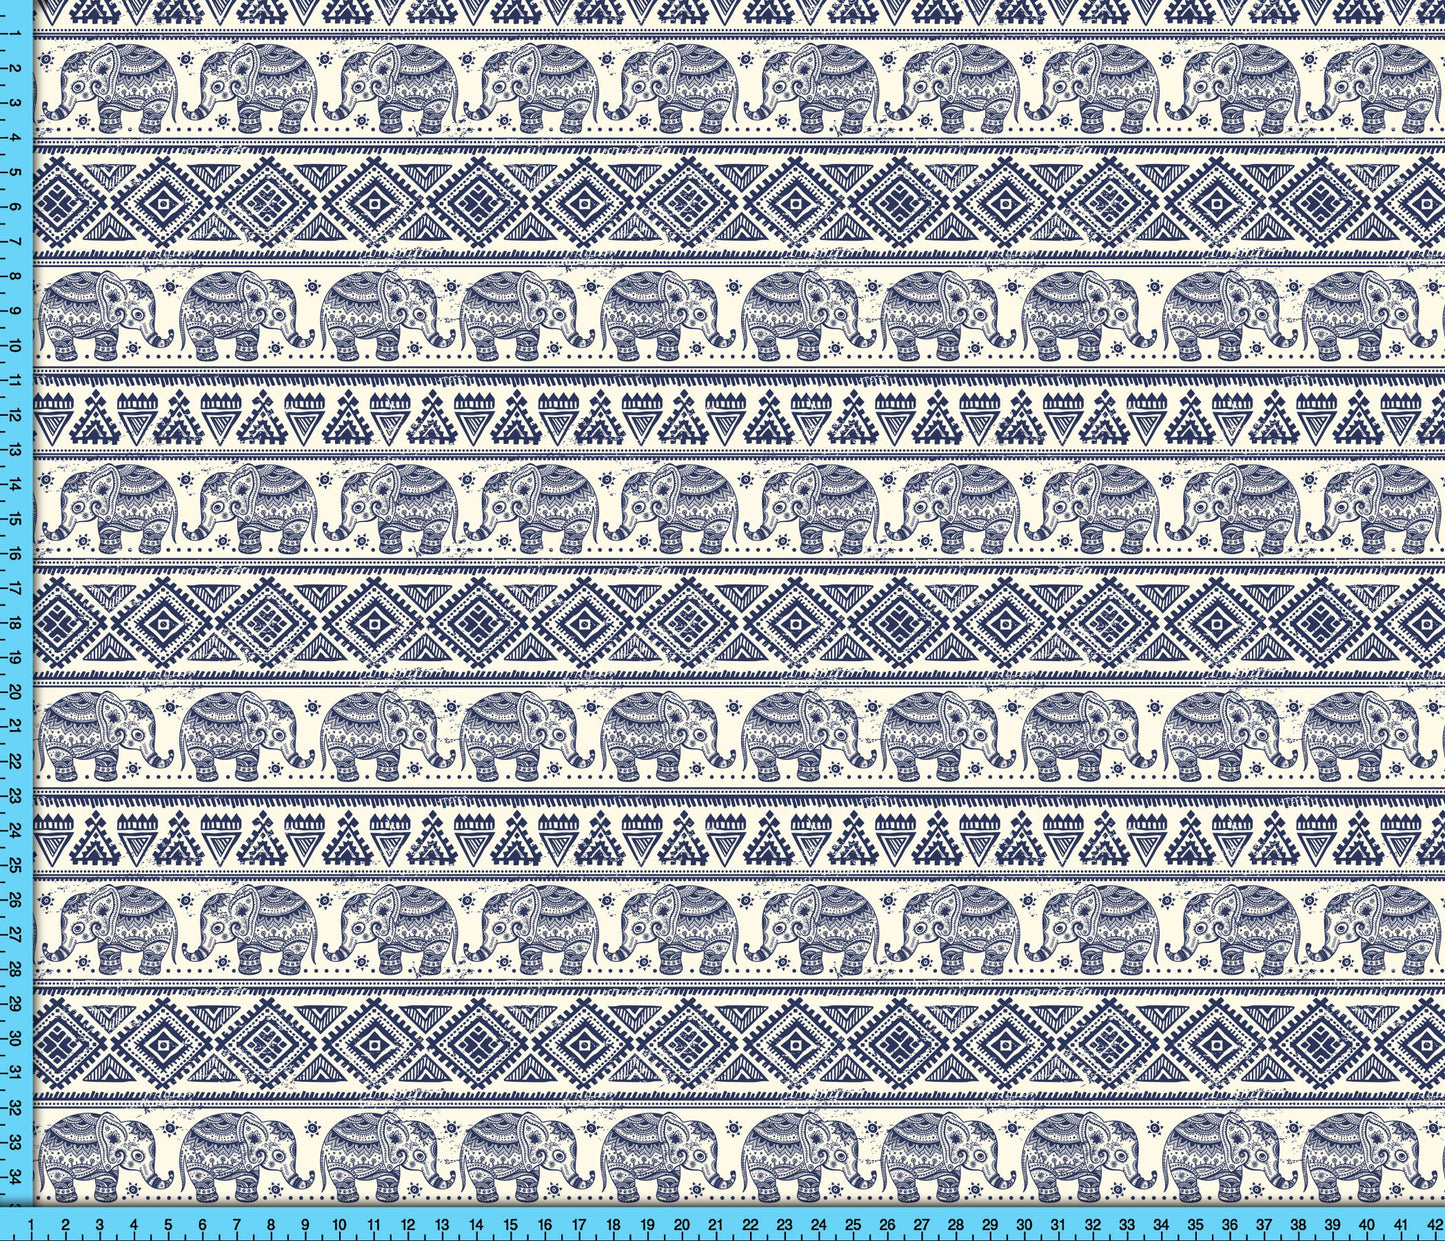 Boho Elephant Fabric Pattern, Blue Elephant Design Fabric By The Yard